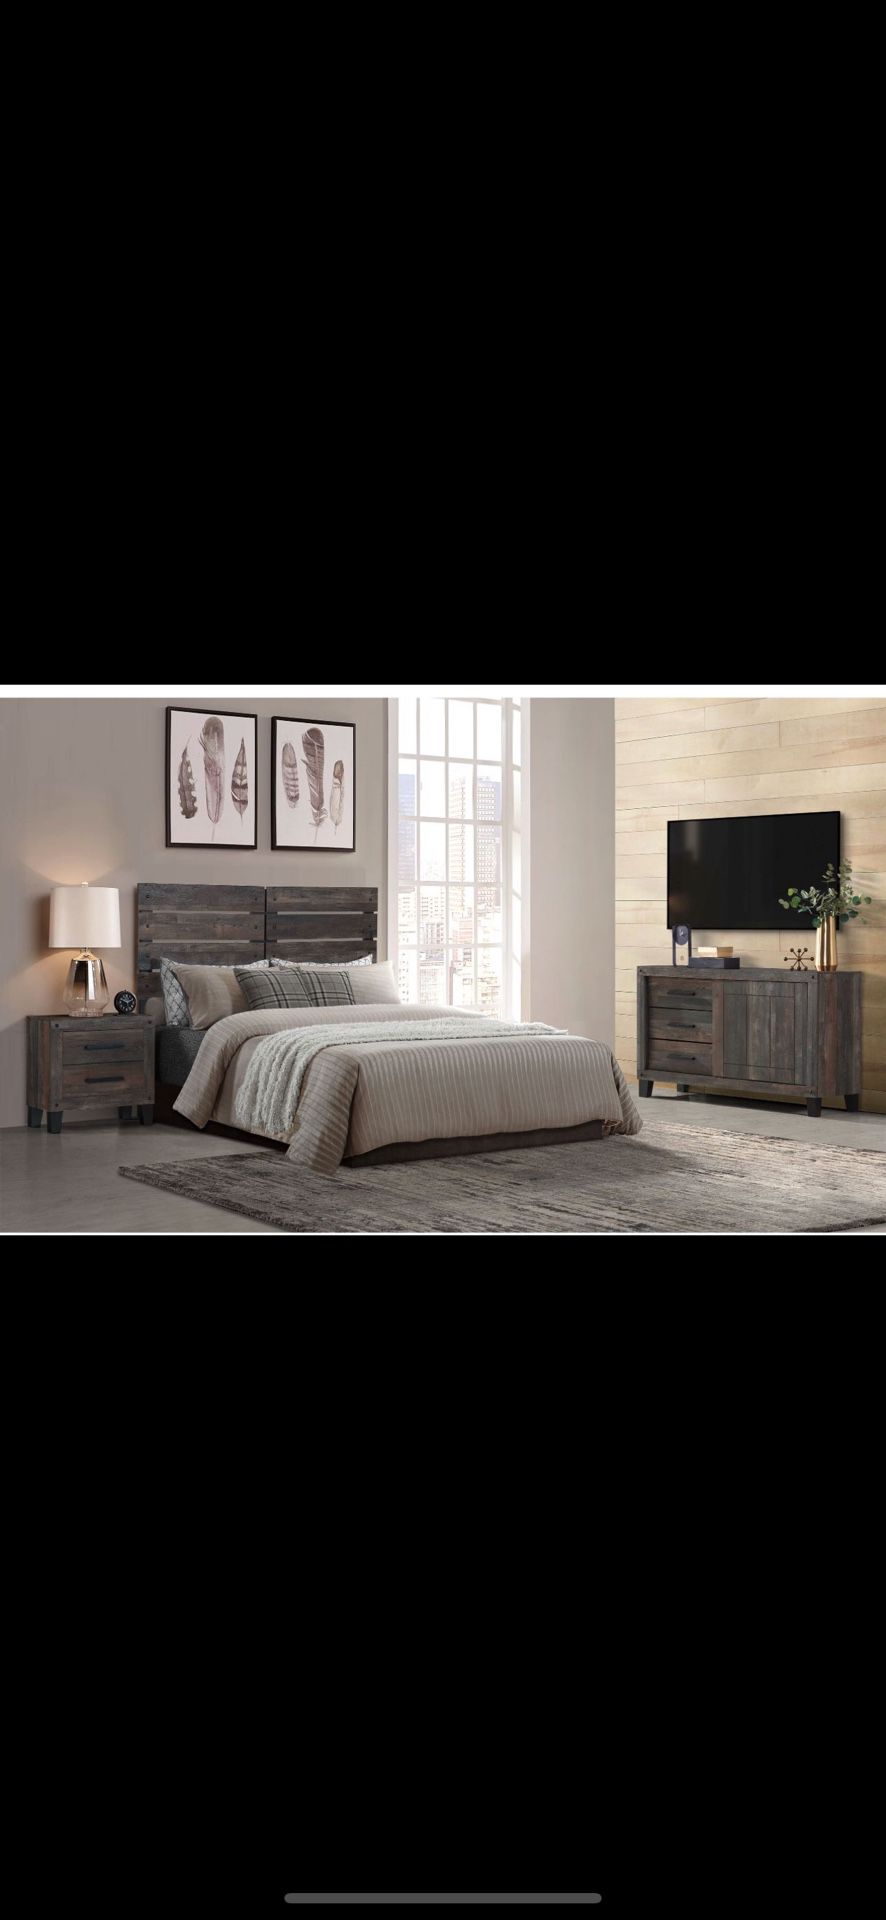 Brand New Complete Bedroom Set For $499